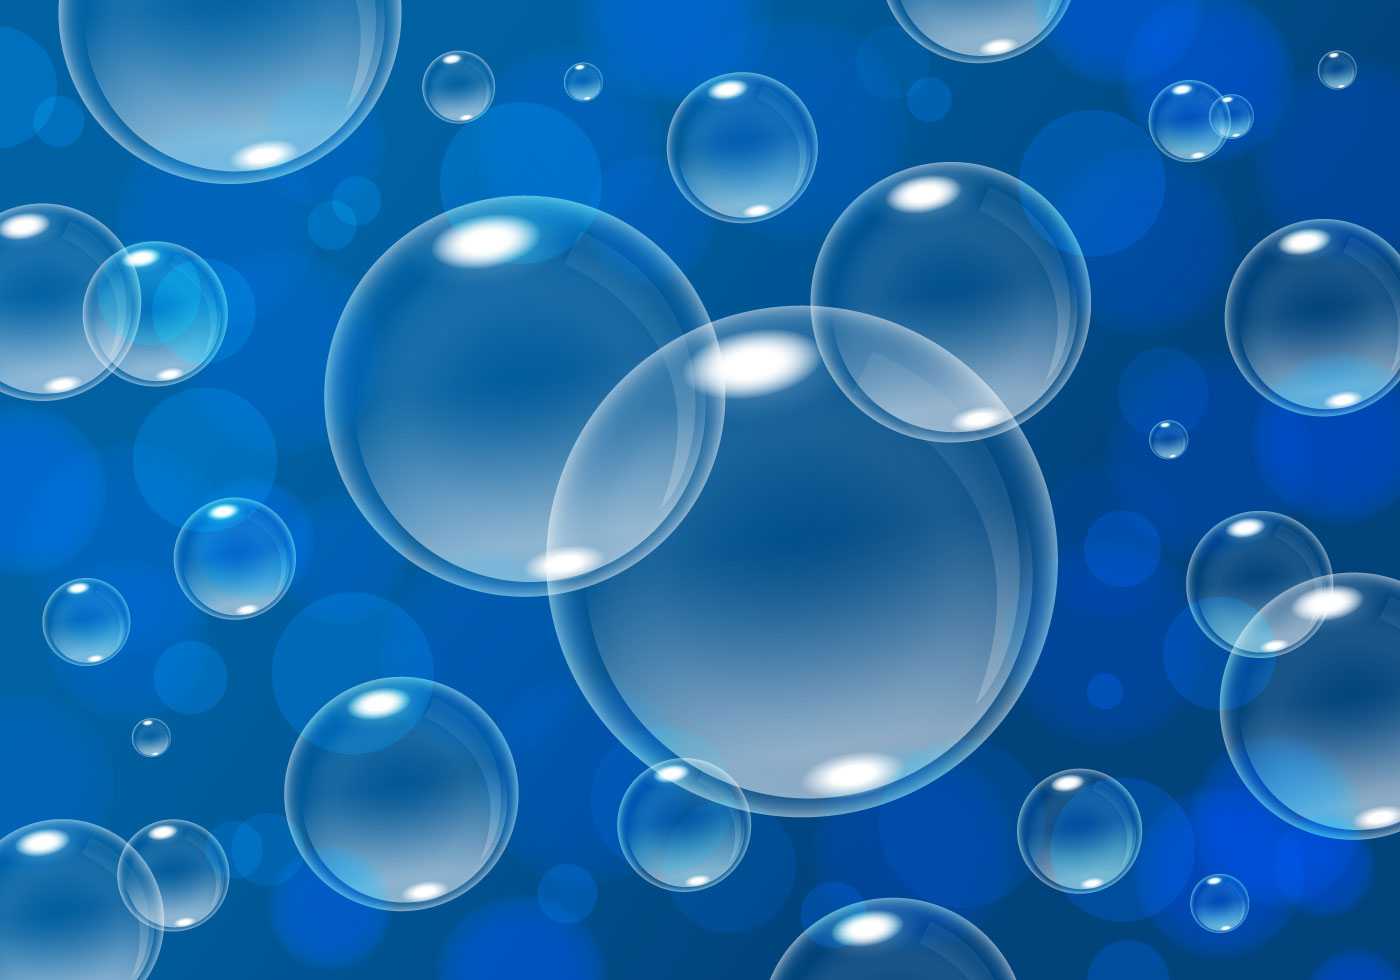 Blue Bubble Background Vector - Download Free Vectors ...